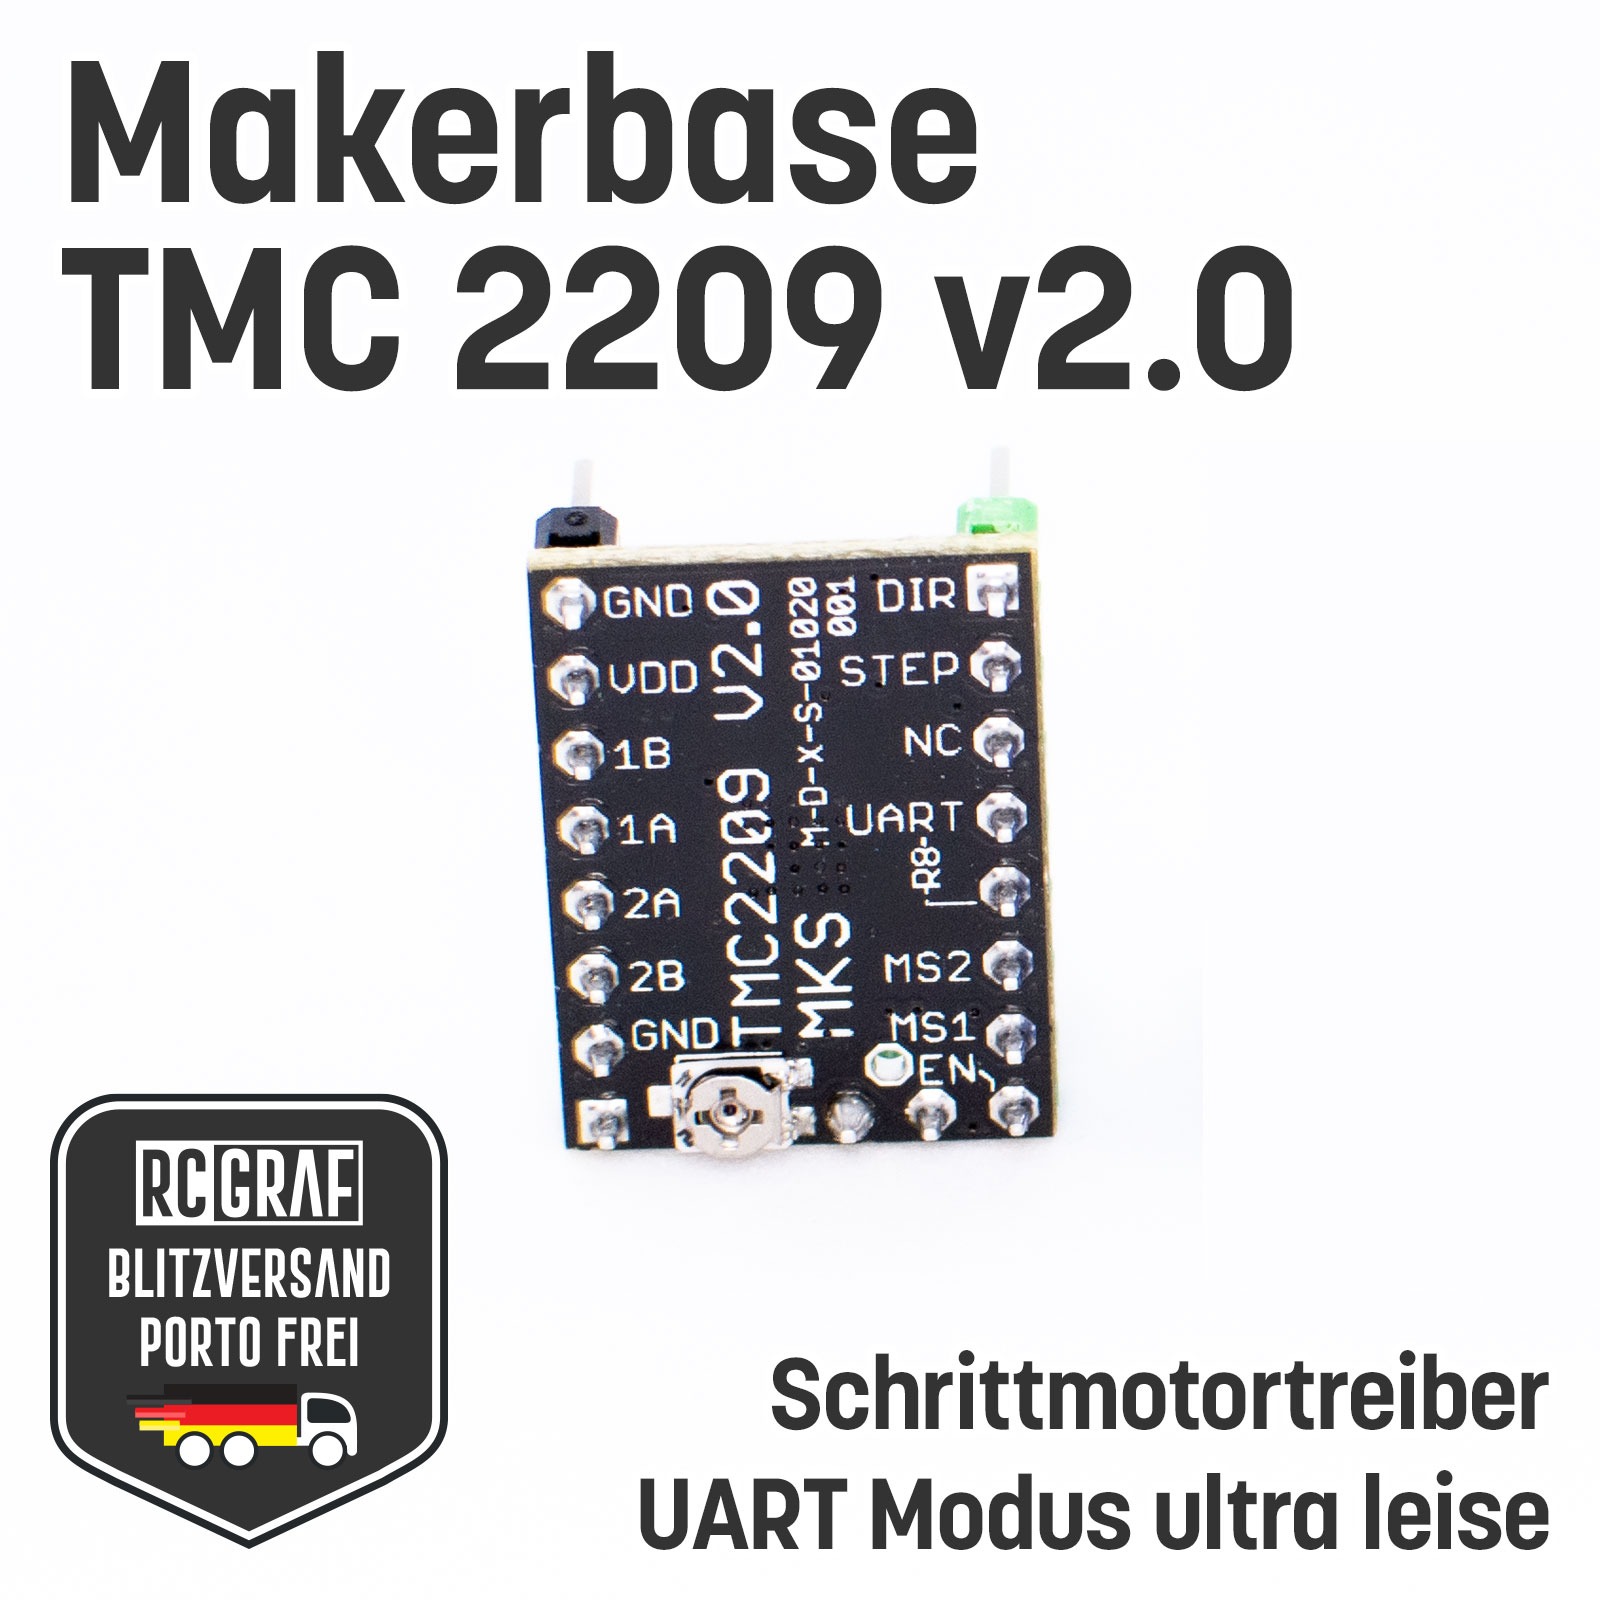 Makerbase TMC2209 V2.0 Schrittmotortreiber UART Modus ultra leise 4